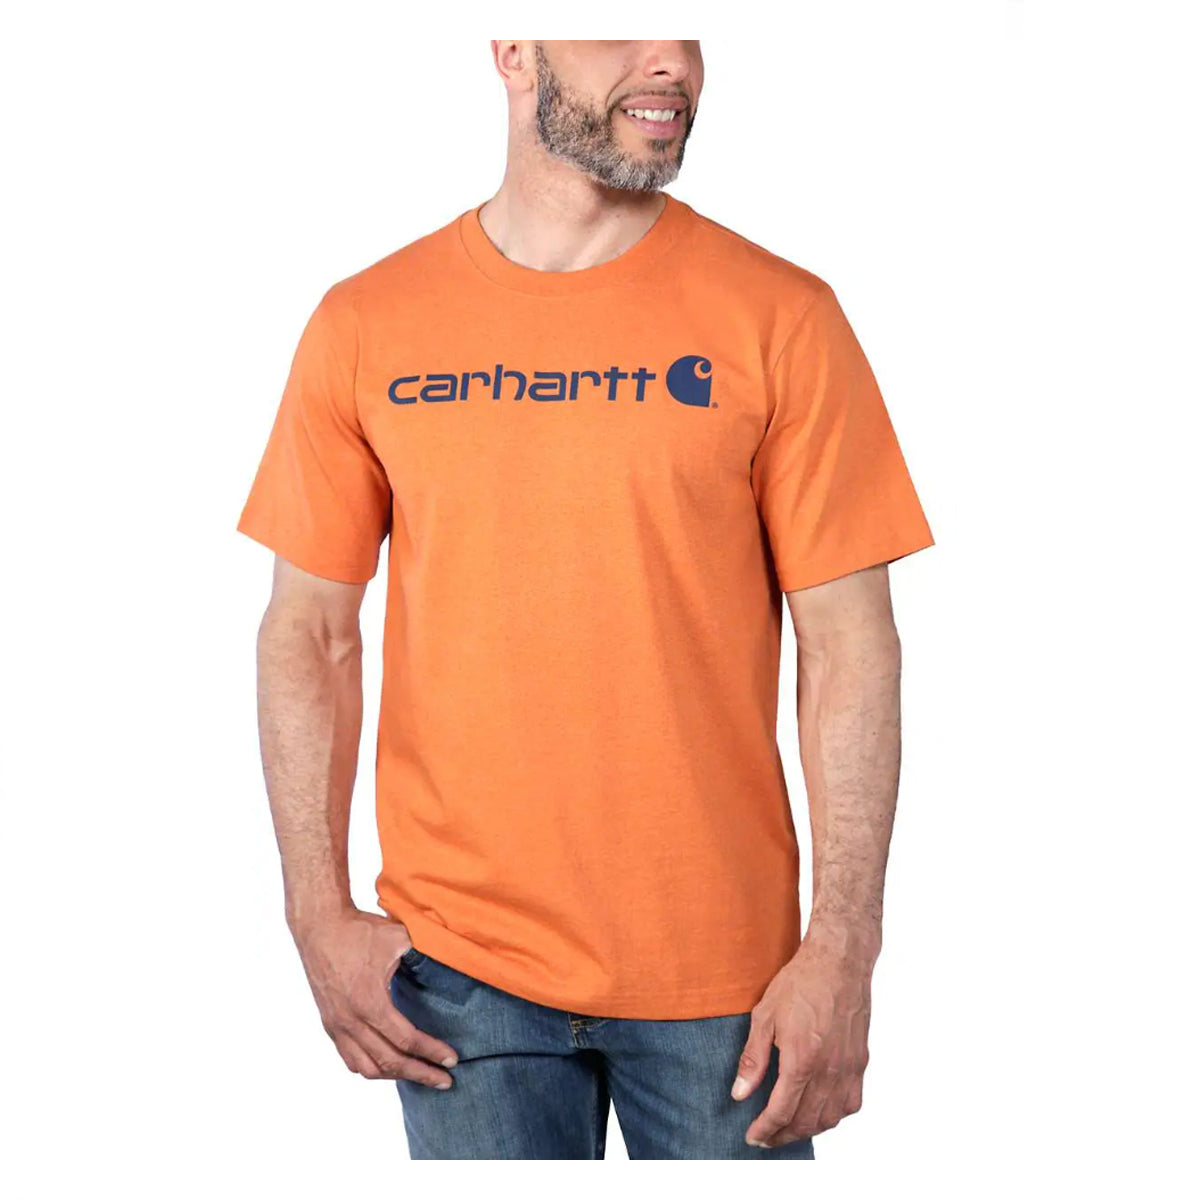 Carhartt - T-Shirt Logo Graphic Marmalade Heather - 103361 - MARMALADE/HEATHER